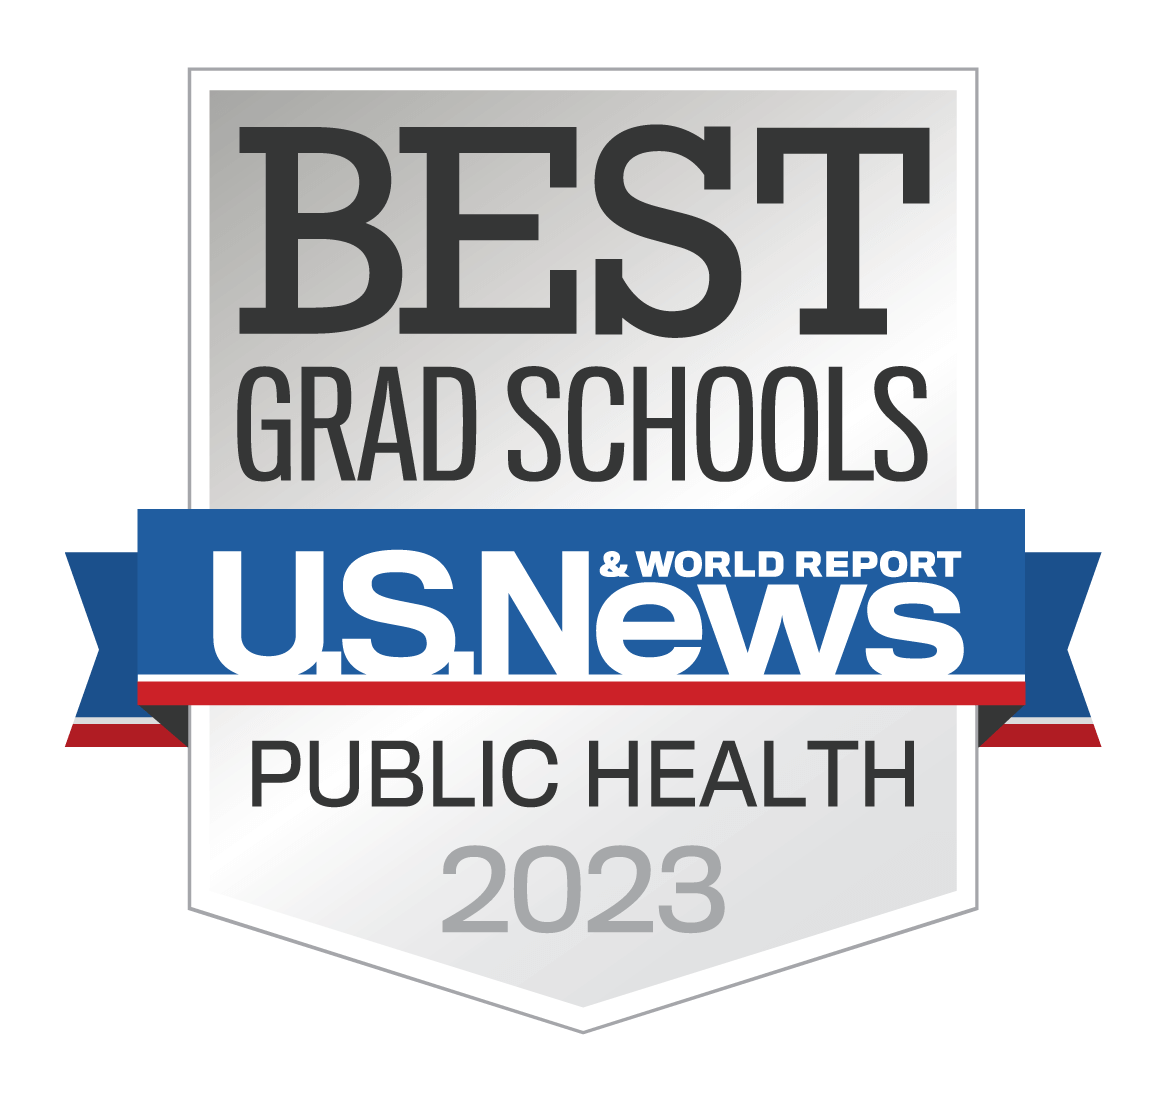 Best Grad Schools - U.S. News & World Report - Public Health 2023